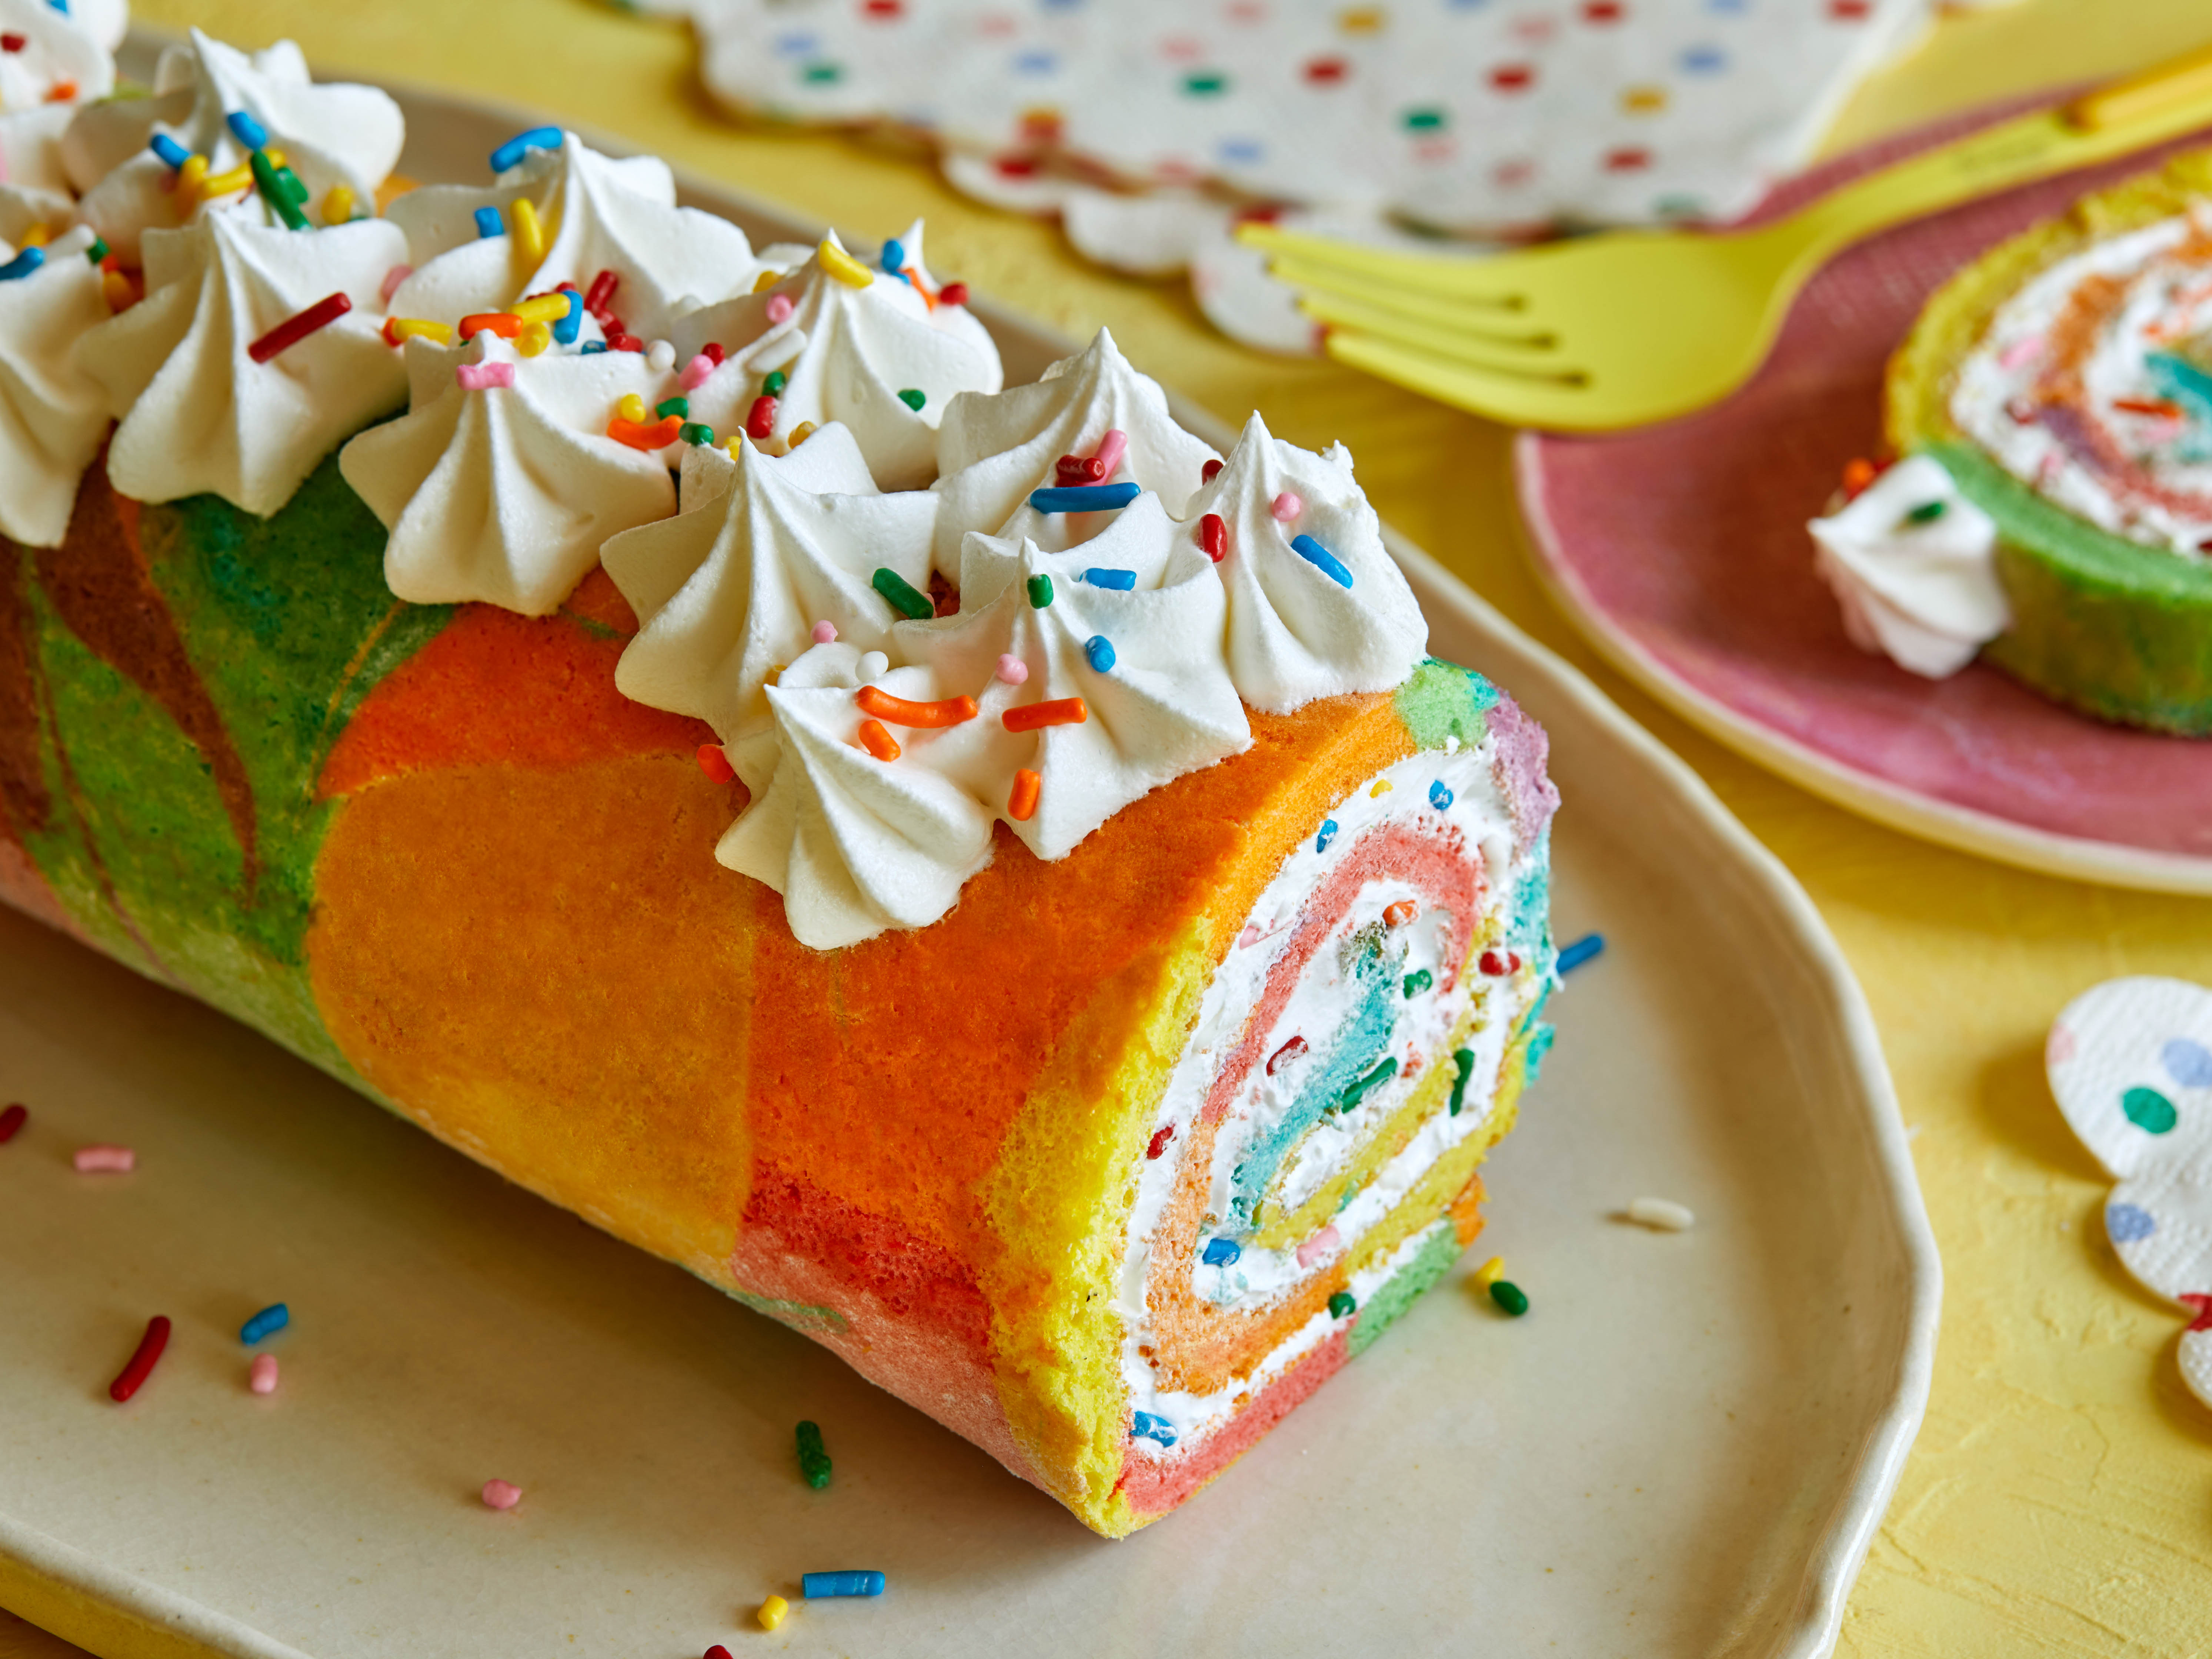 https://www.foodnetwork.com/content/dam/images/food/fullset/2022/06/03/0/FNK_Tie-Dye-Cake-Roll_H2_s4x3.jpg